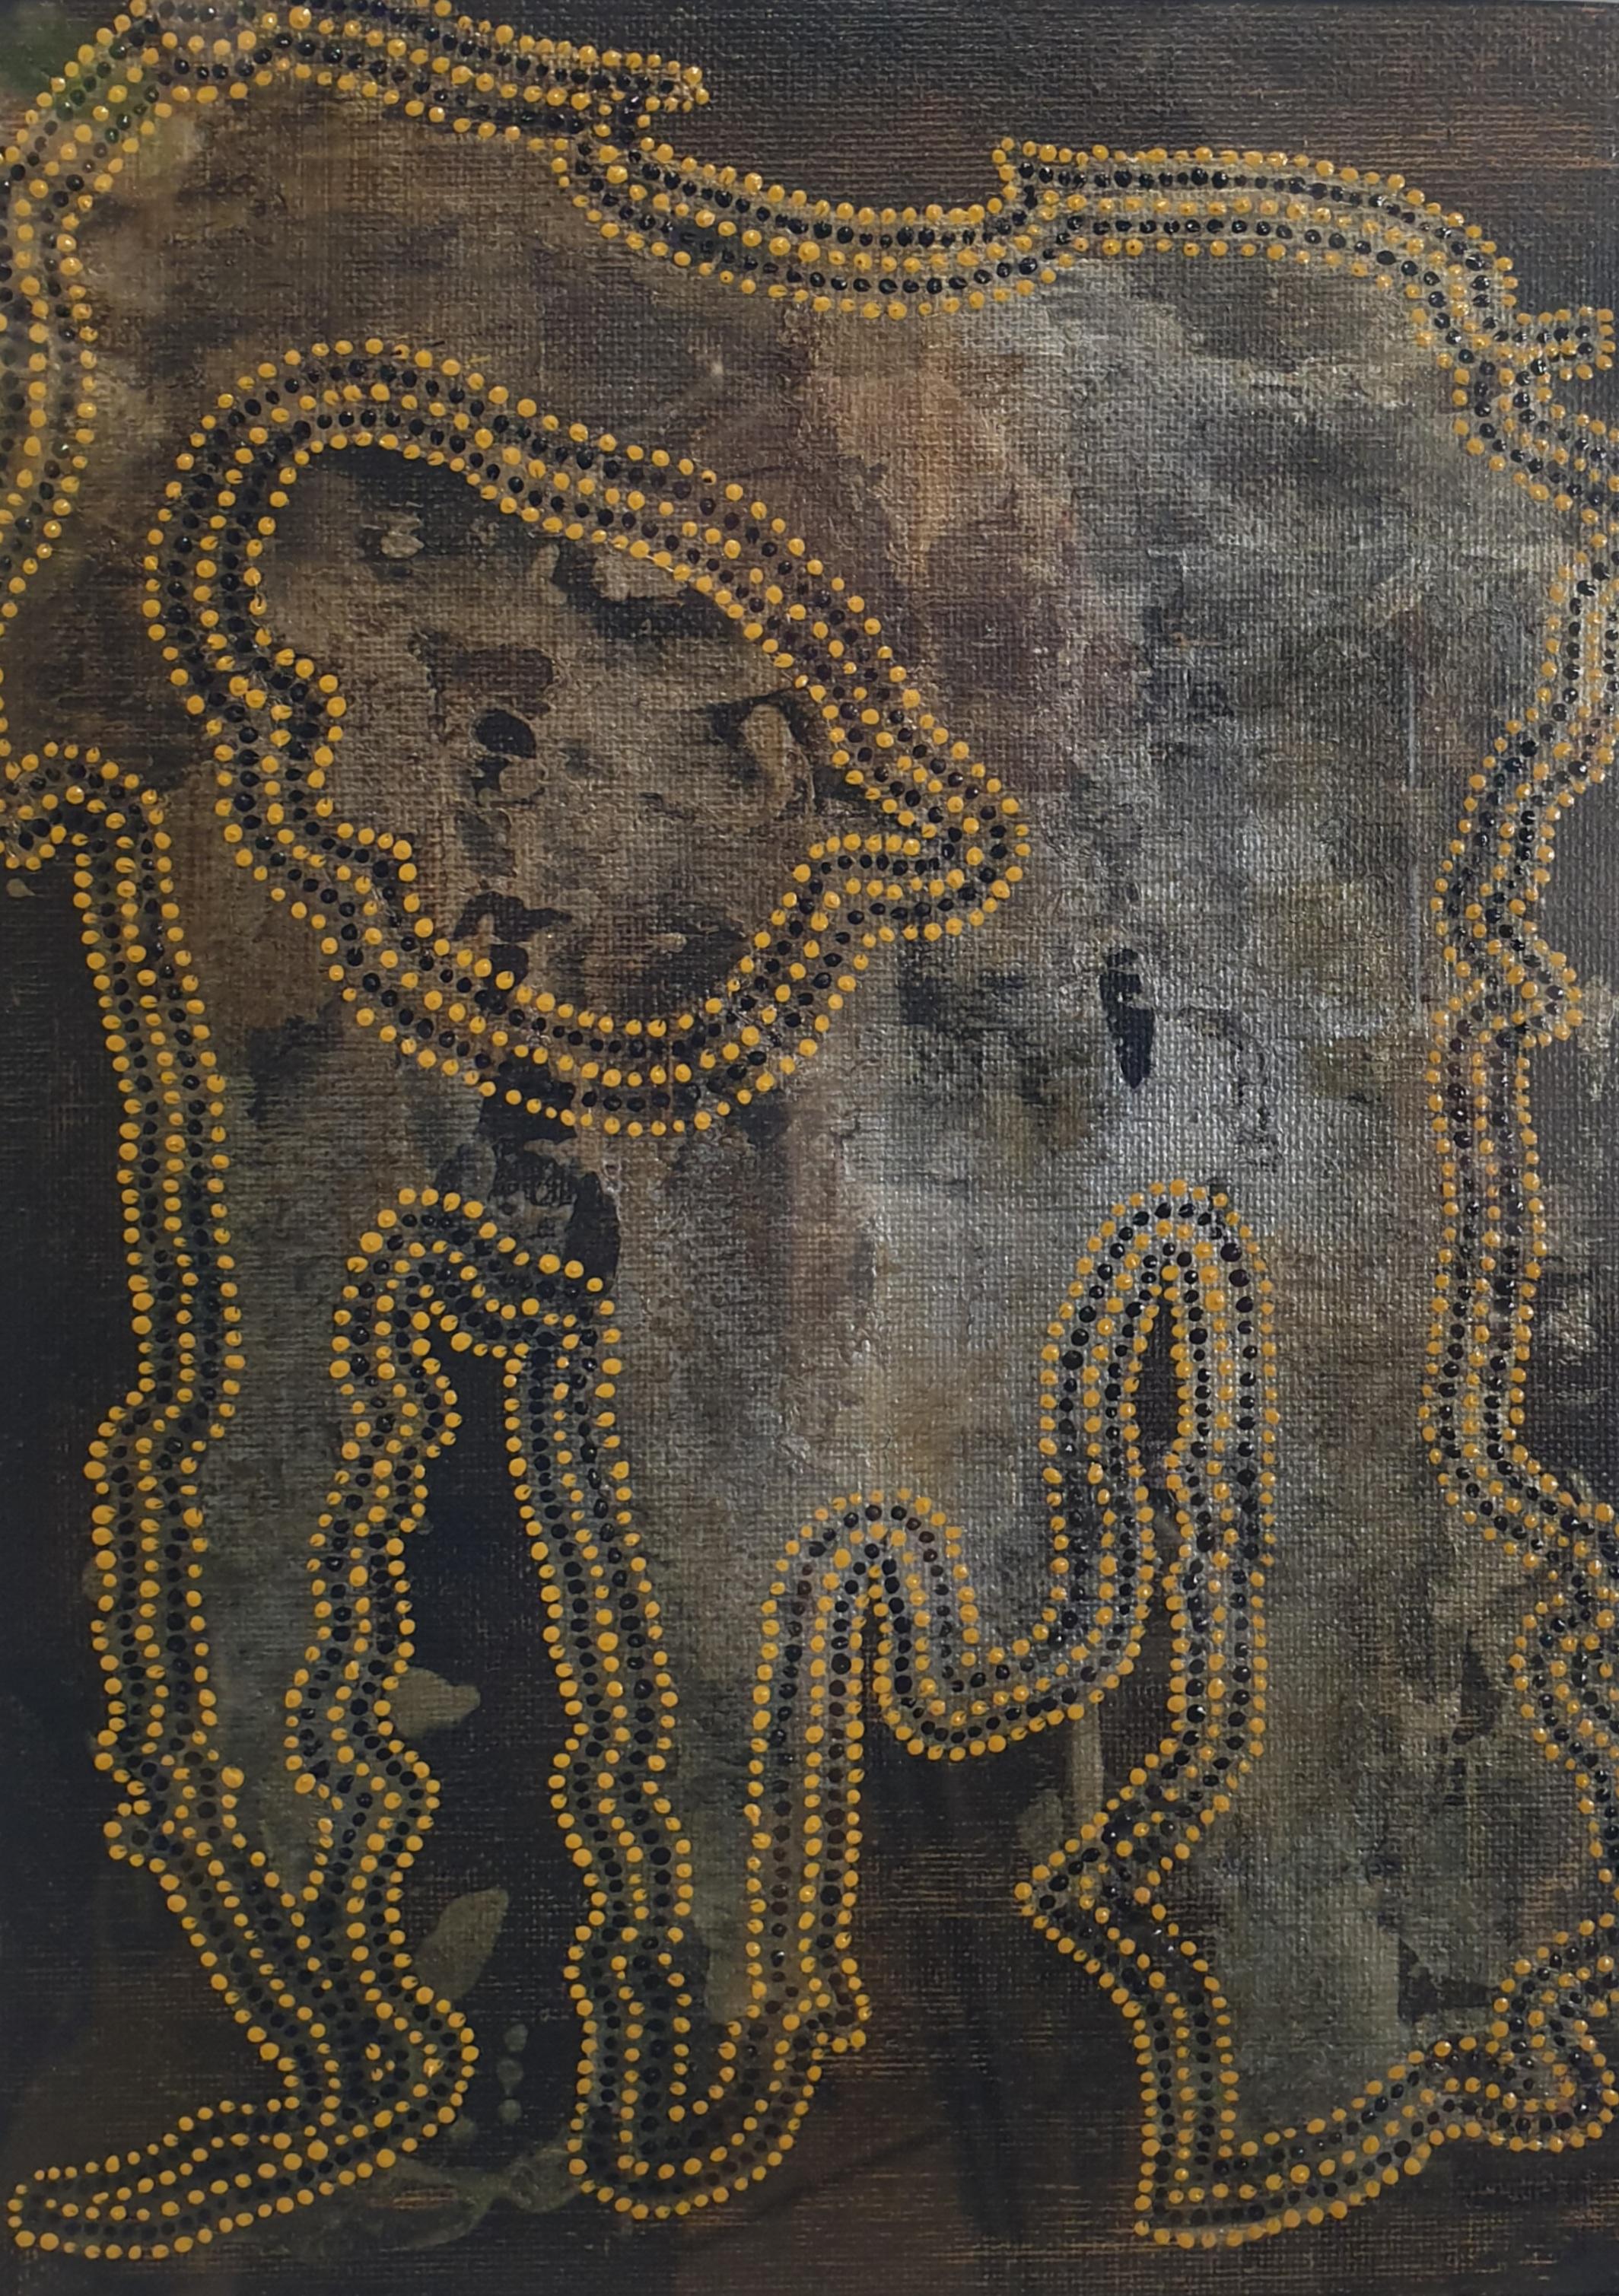 Abstract Painting Menno Modderman  - Abstrait contemporain d'inspiration aborigène.